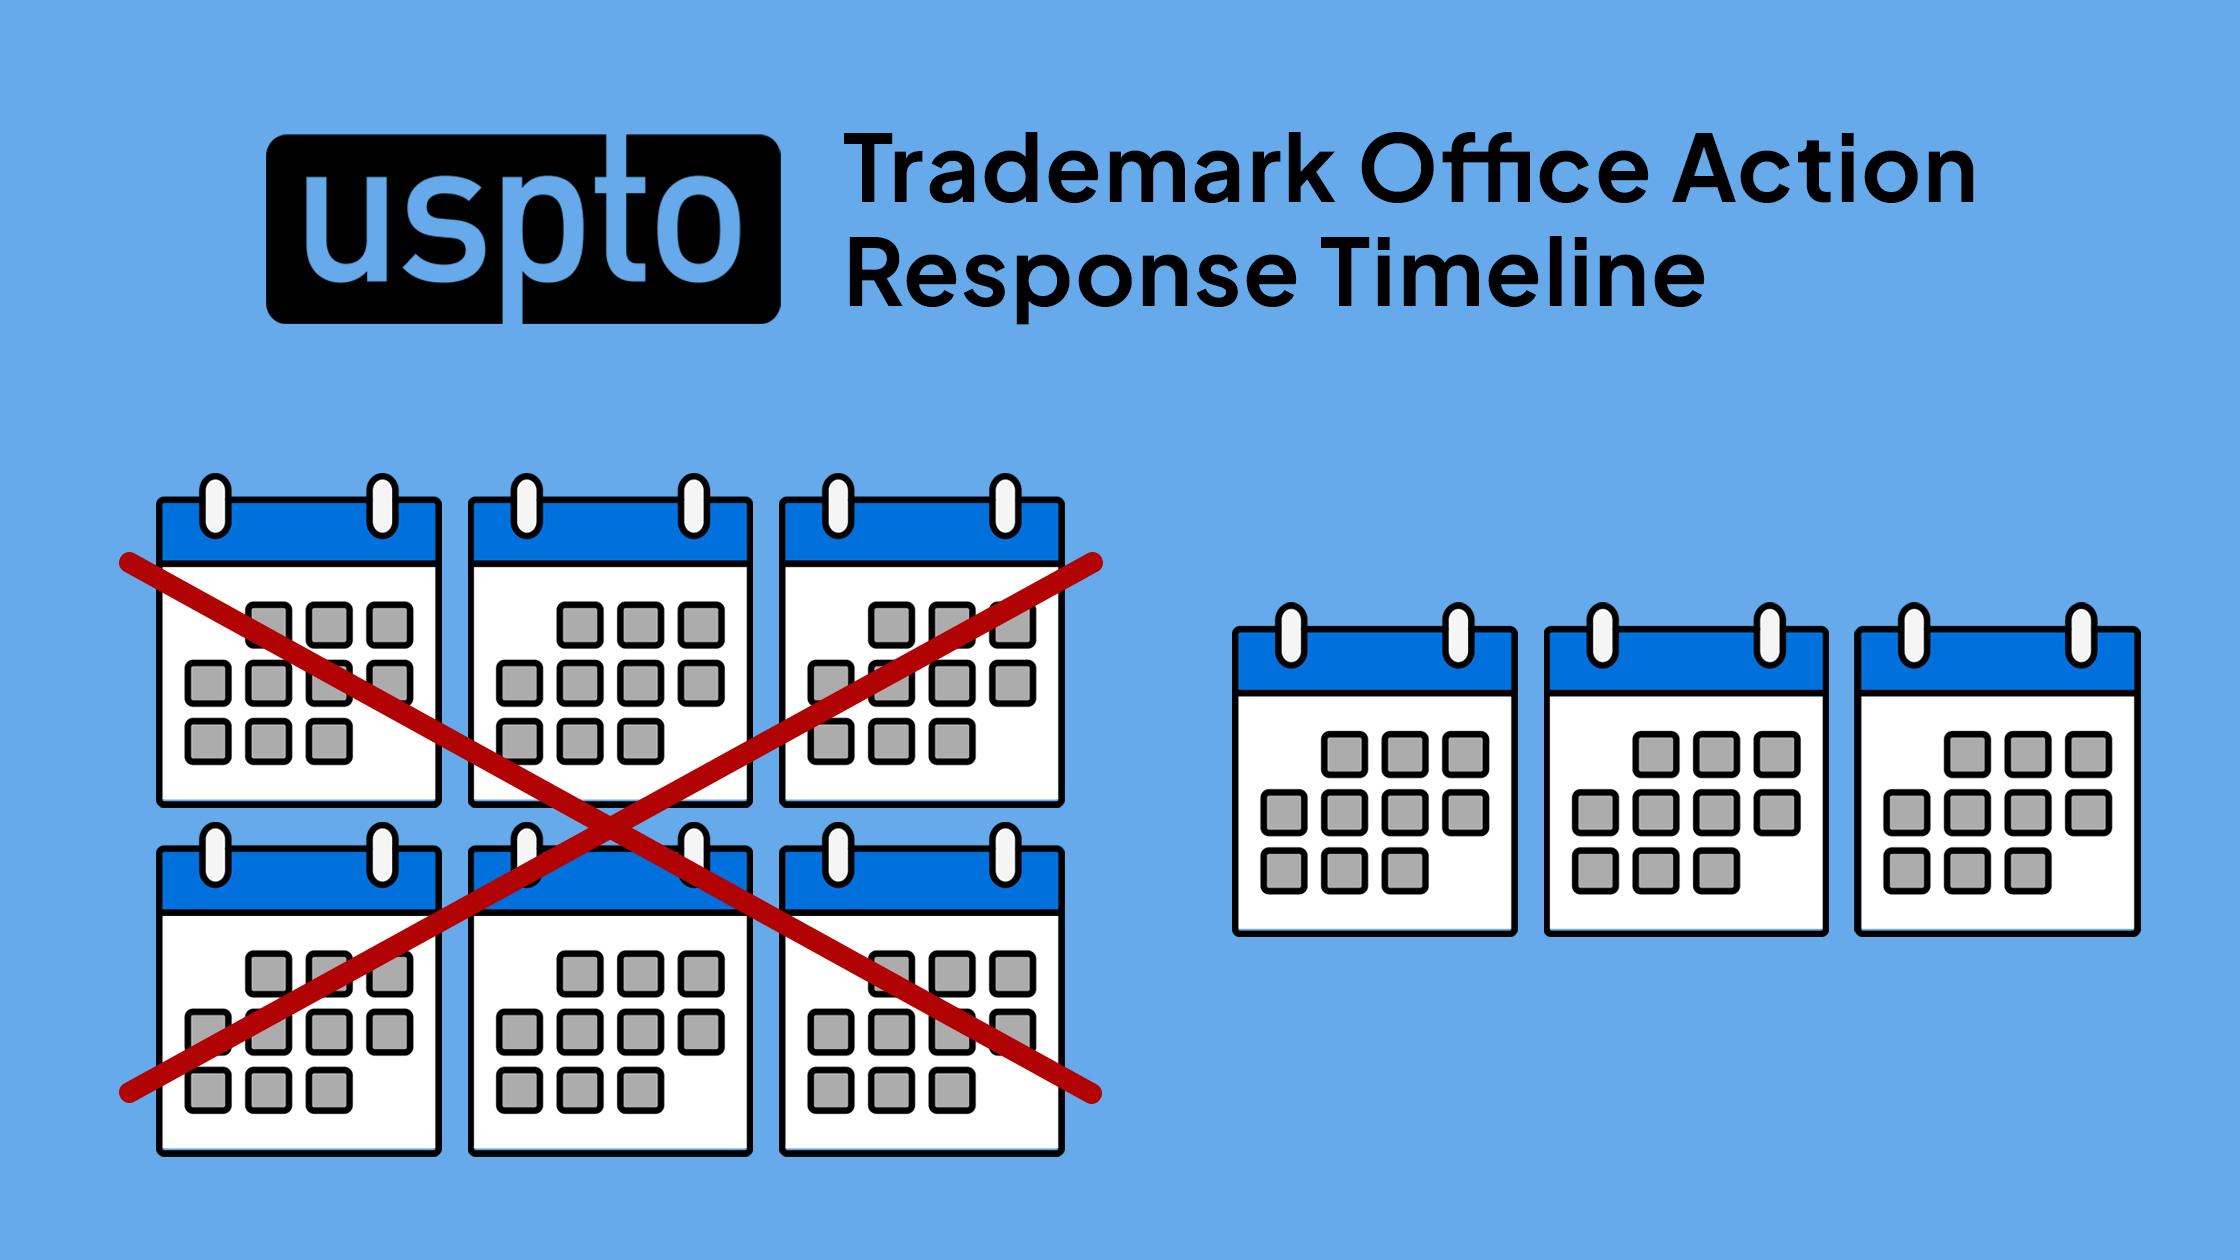 USPTO Trademark Office Action Response Timeline